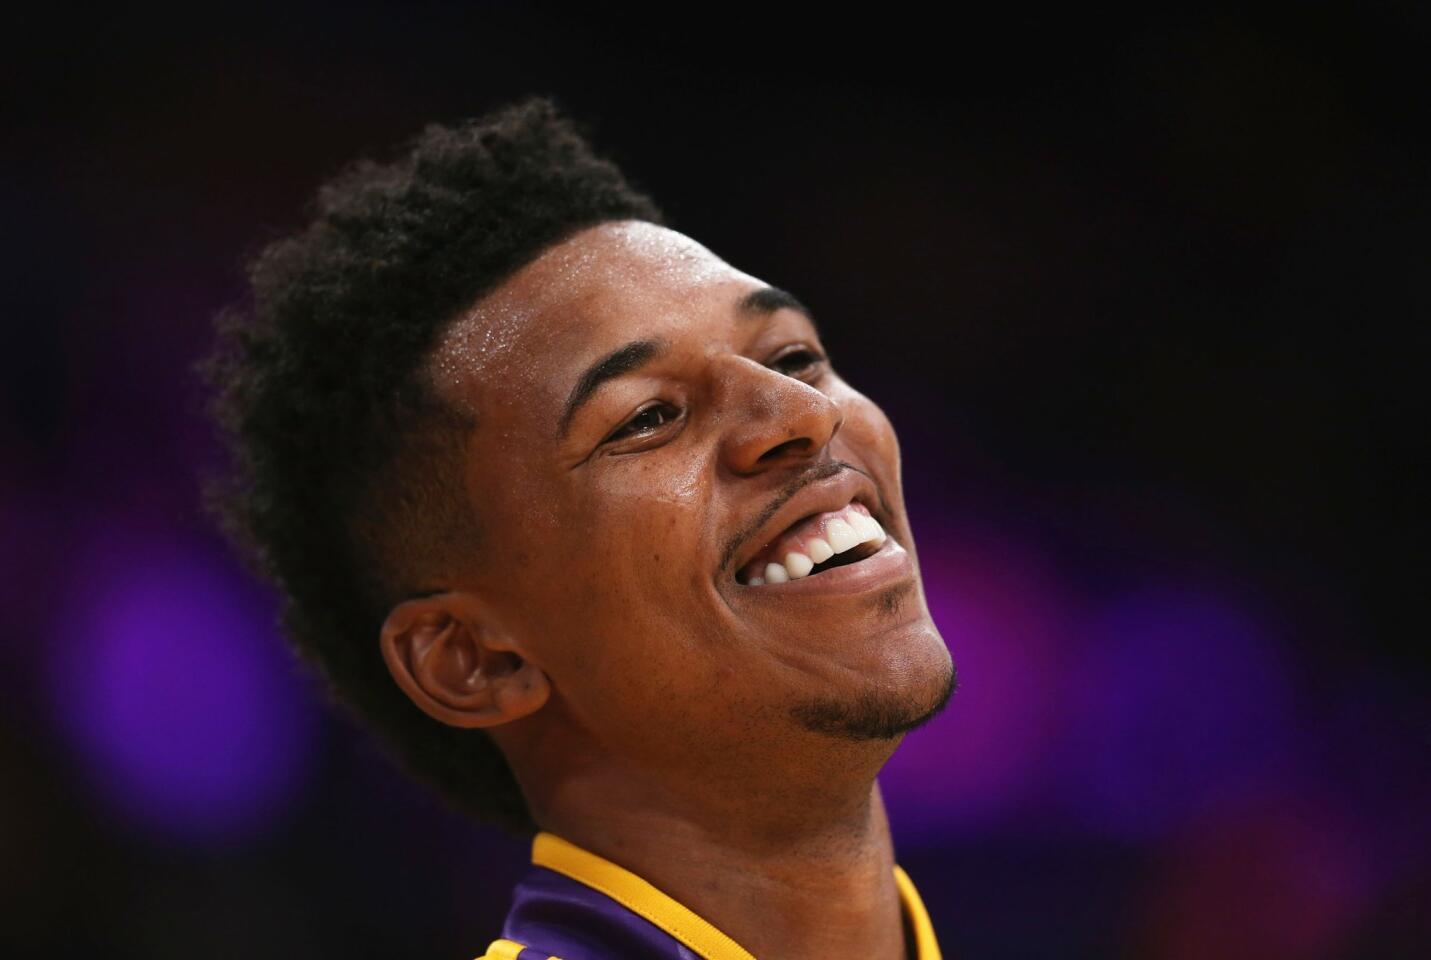 Hair apparent advantage: Lakers